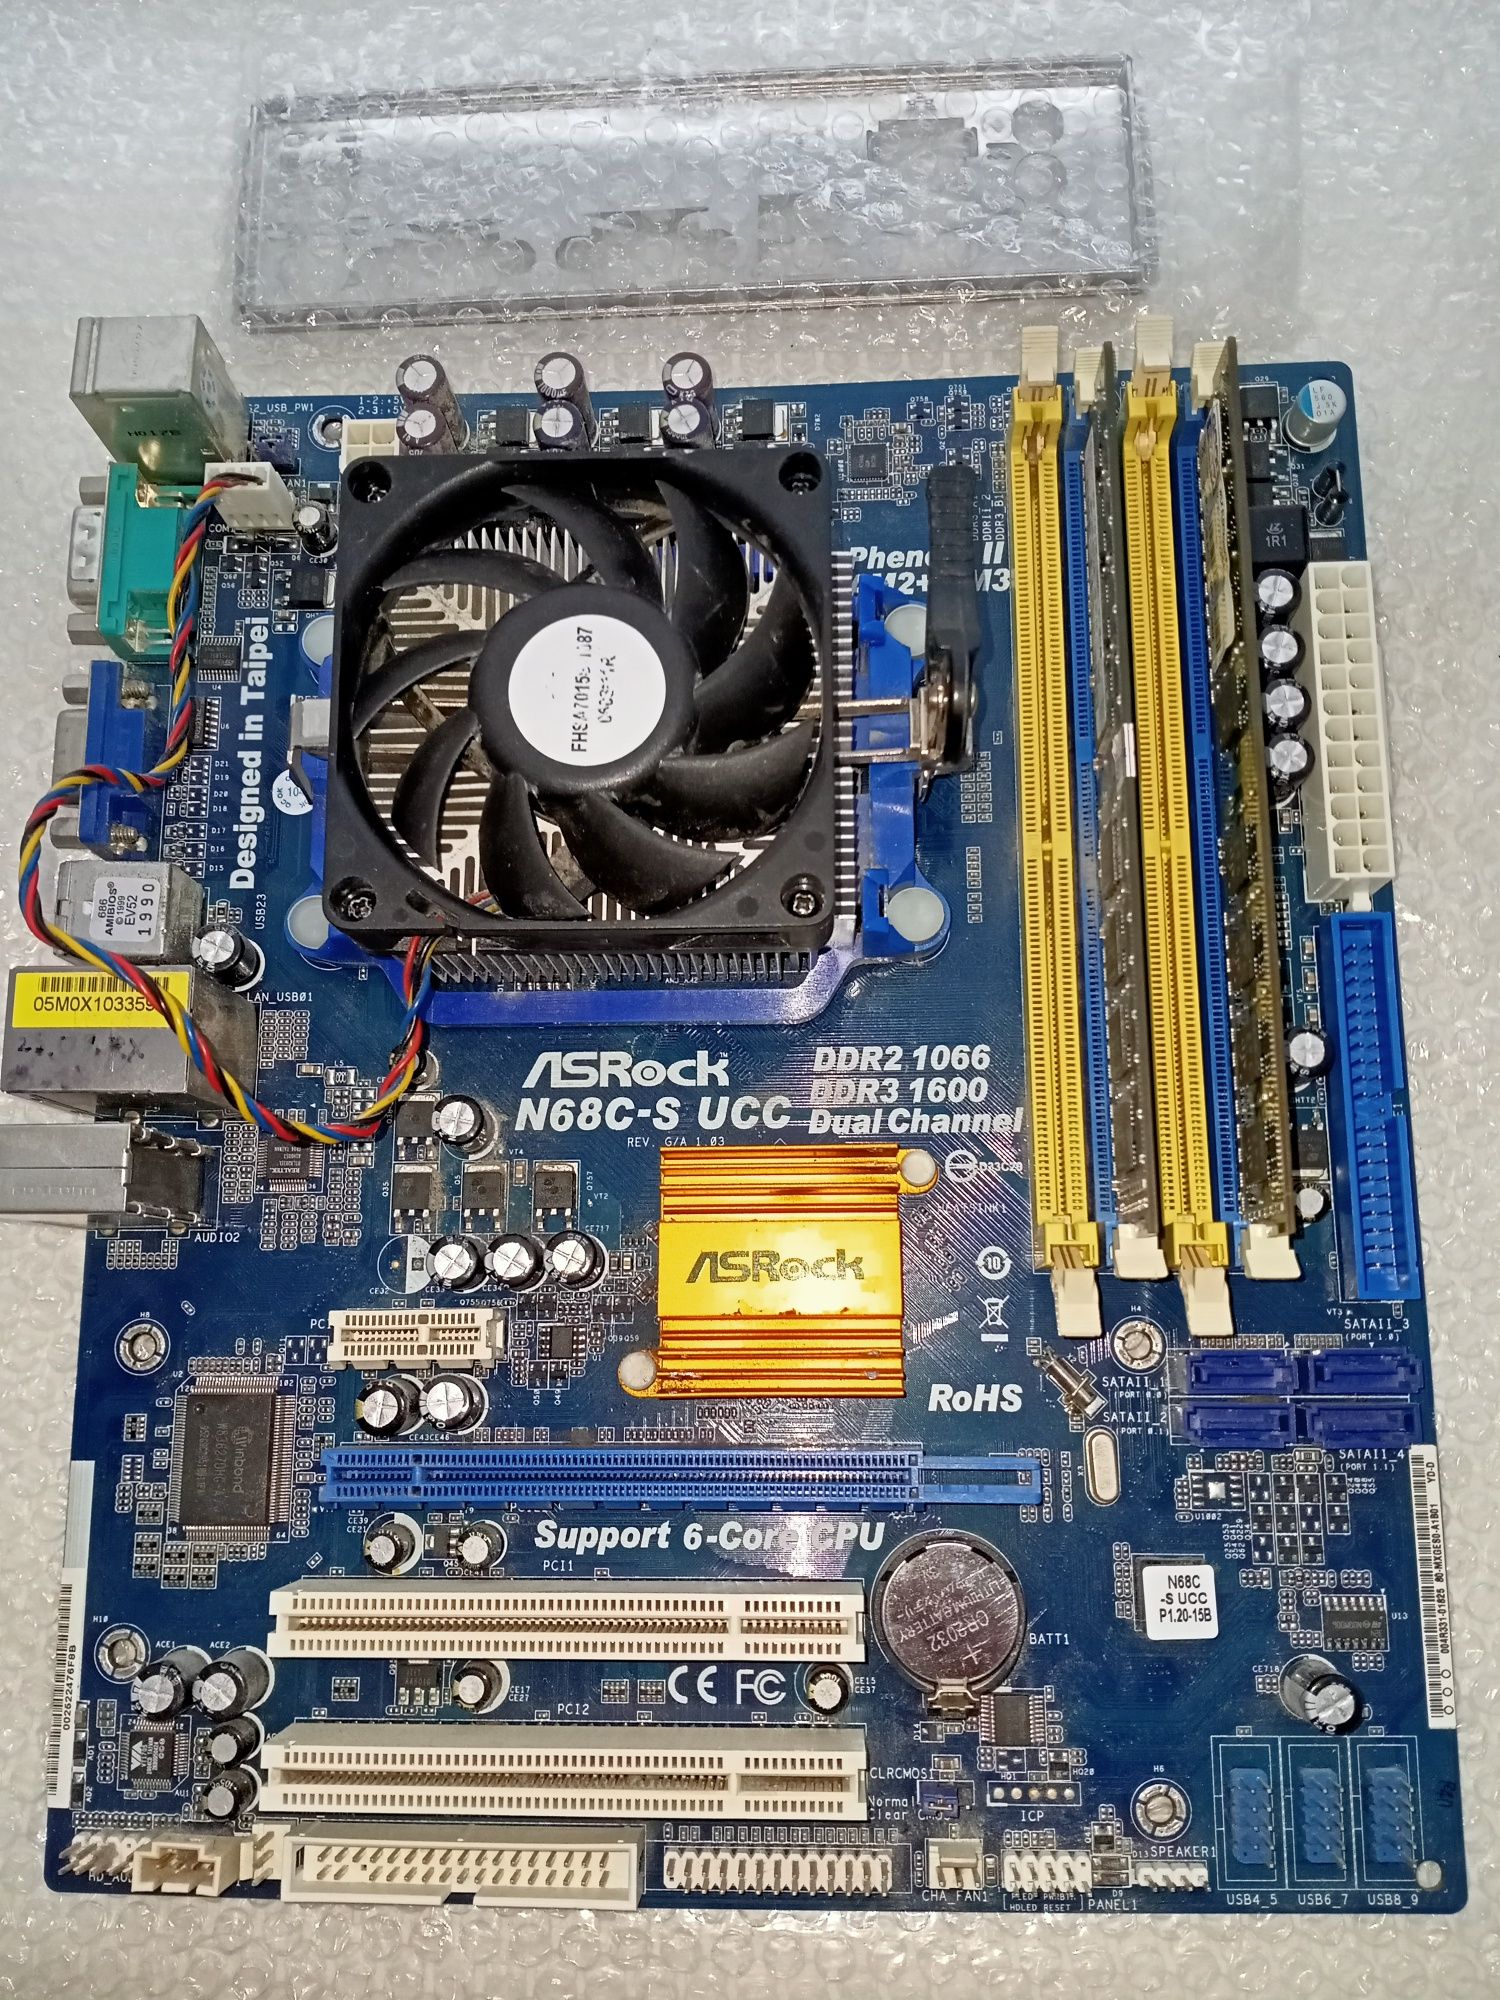 Связка ASRock N68C-S UCC + Athlon II X2

Продам связку: